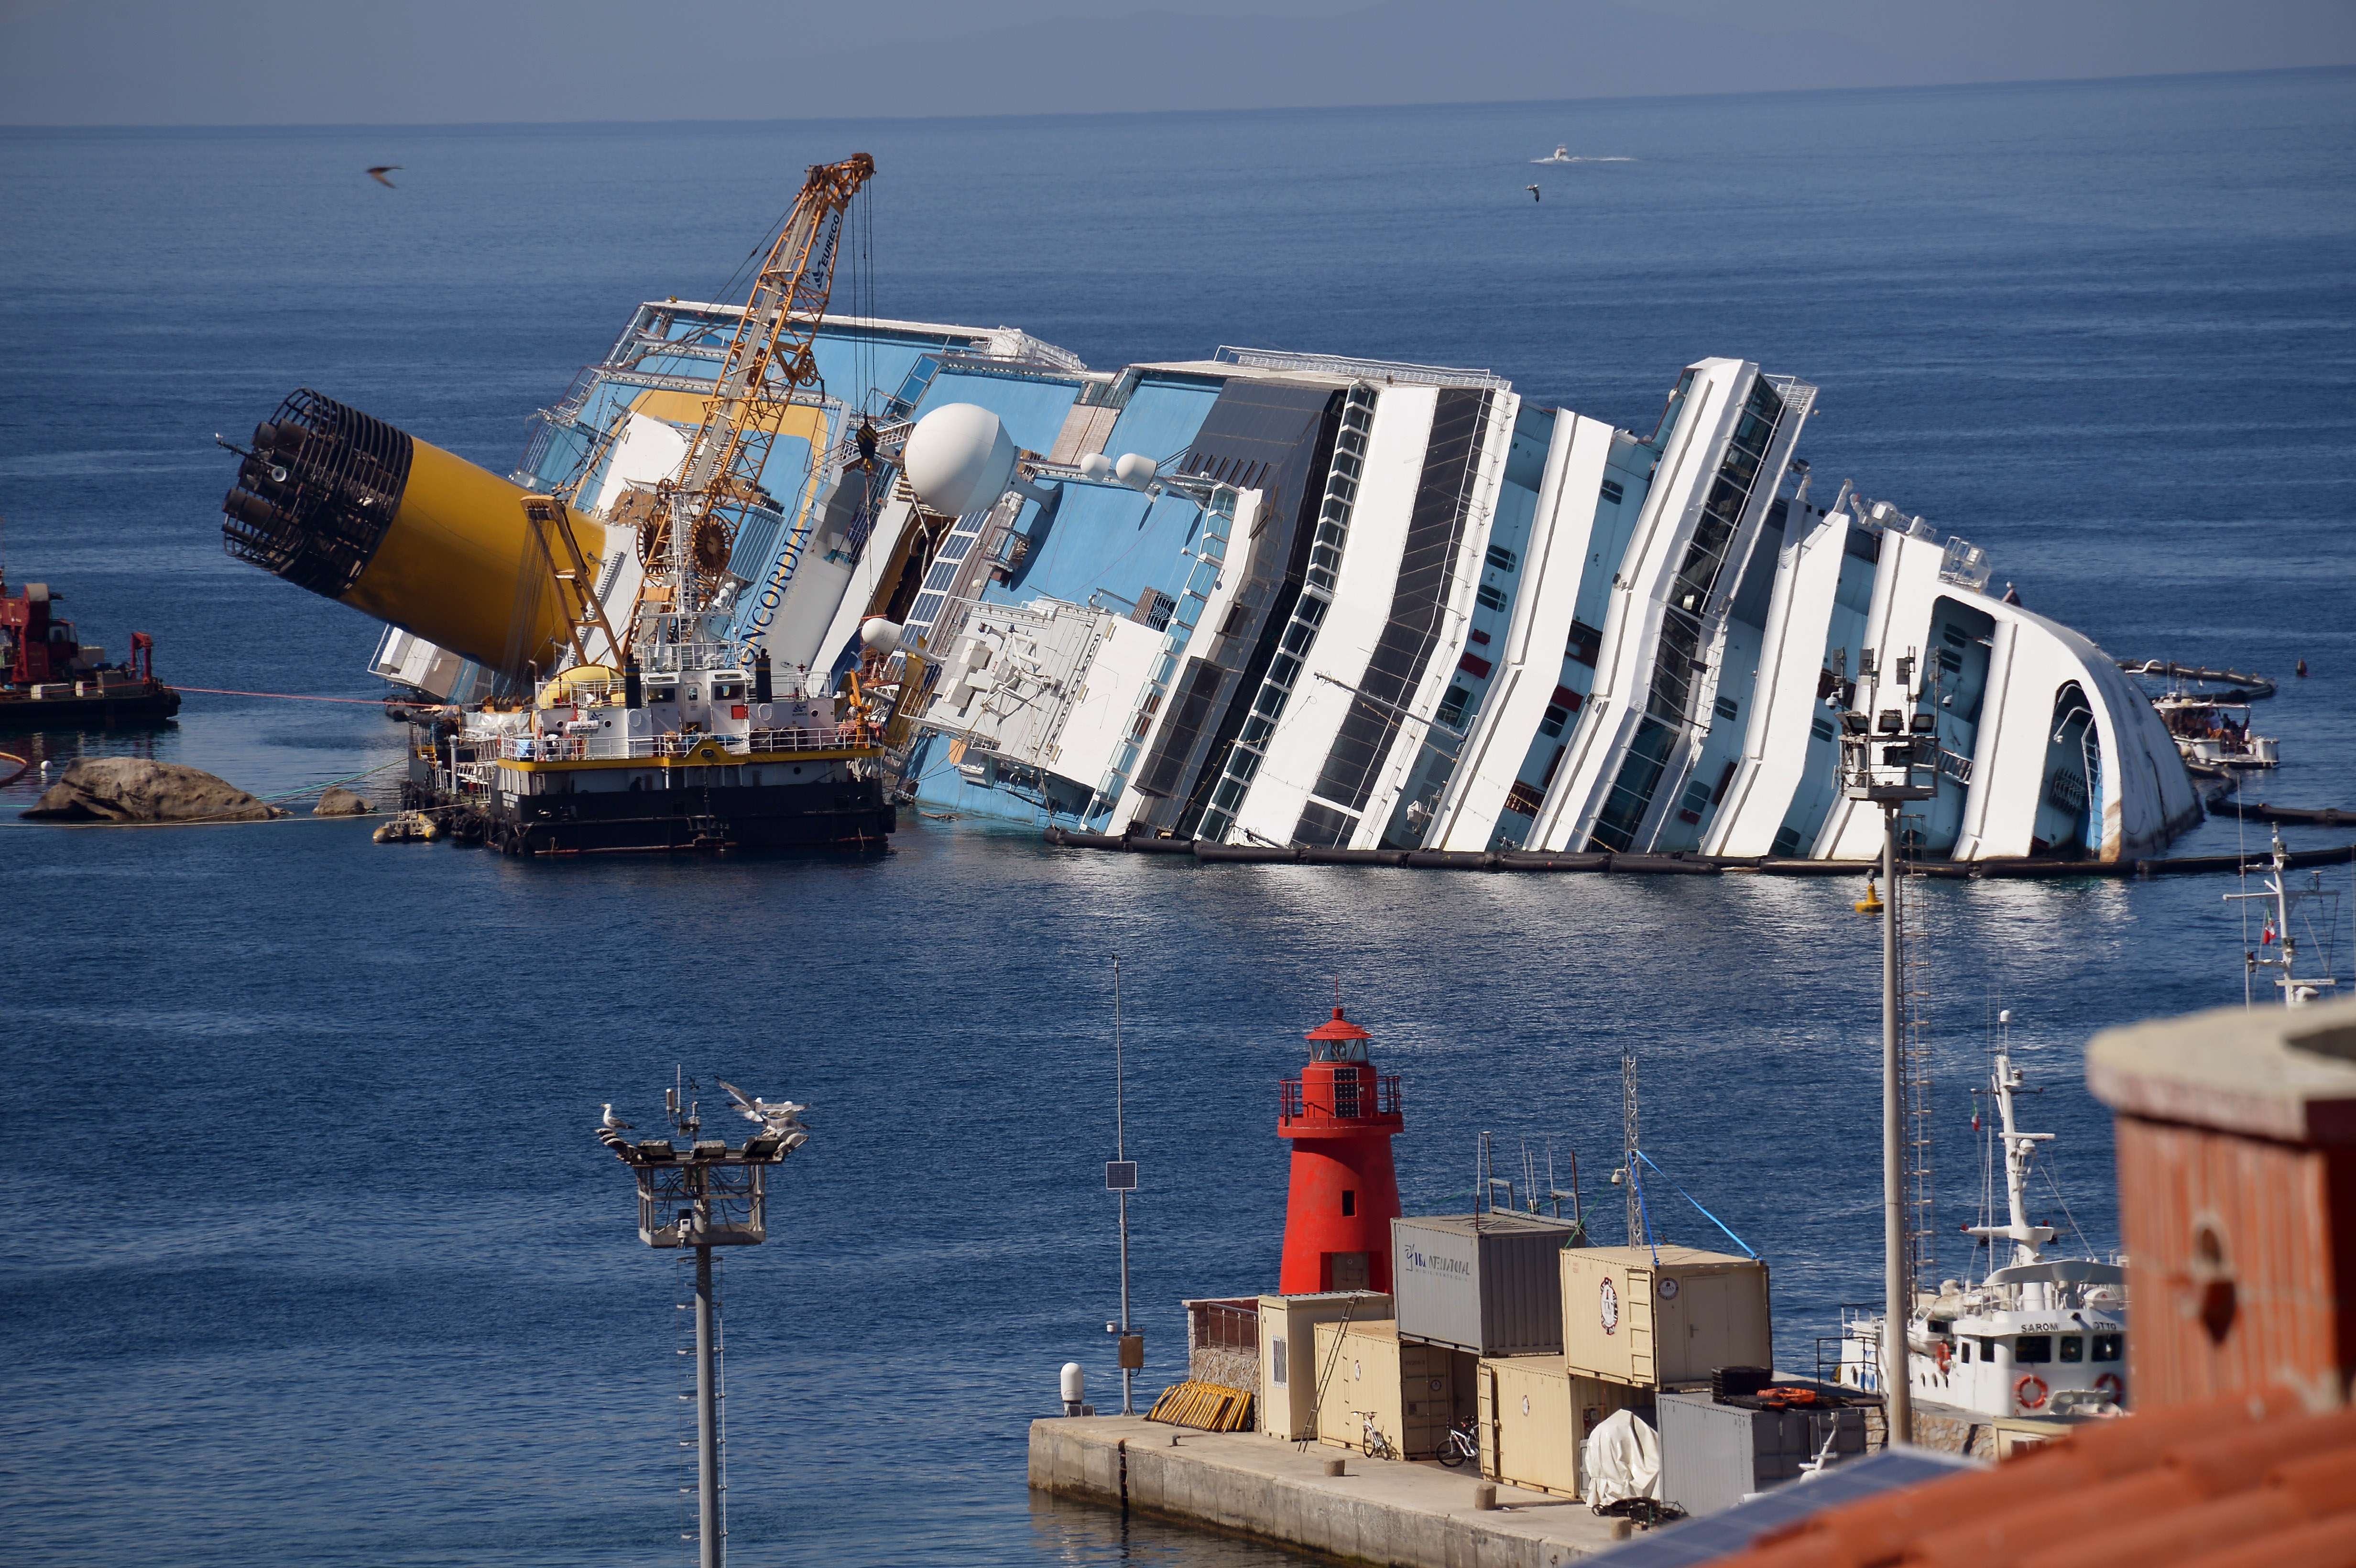 Nava Costa Concordia a fost redresata cu succes. 